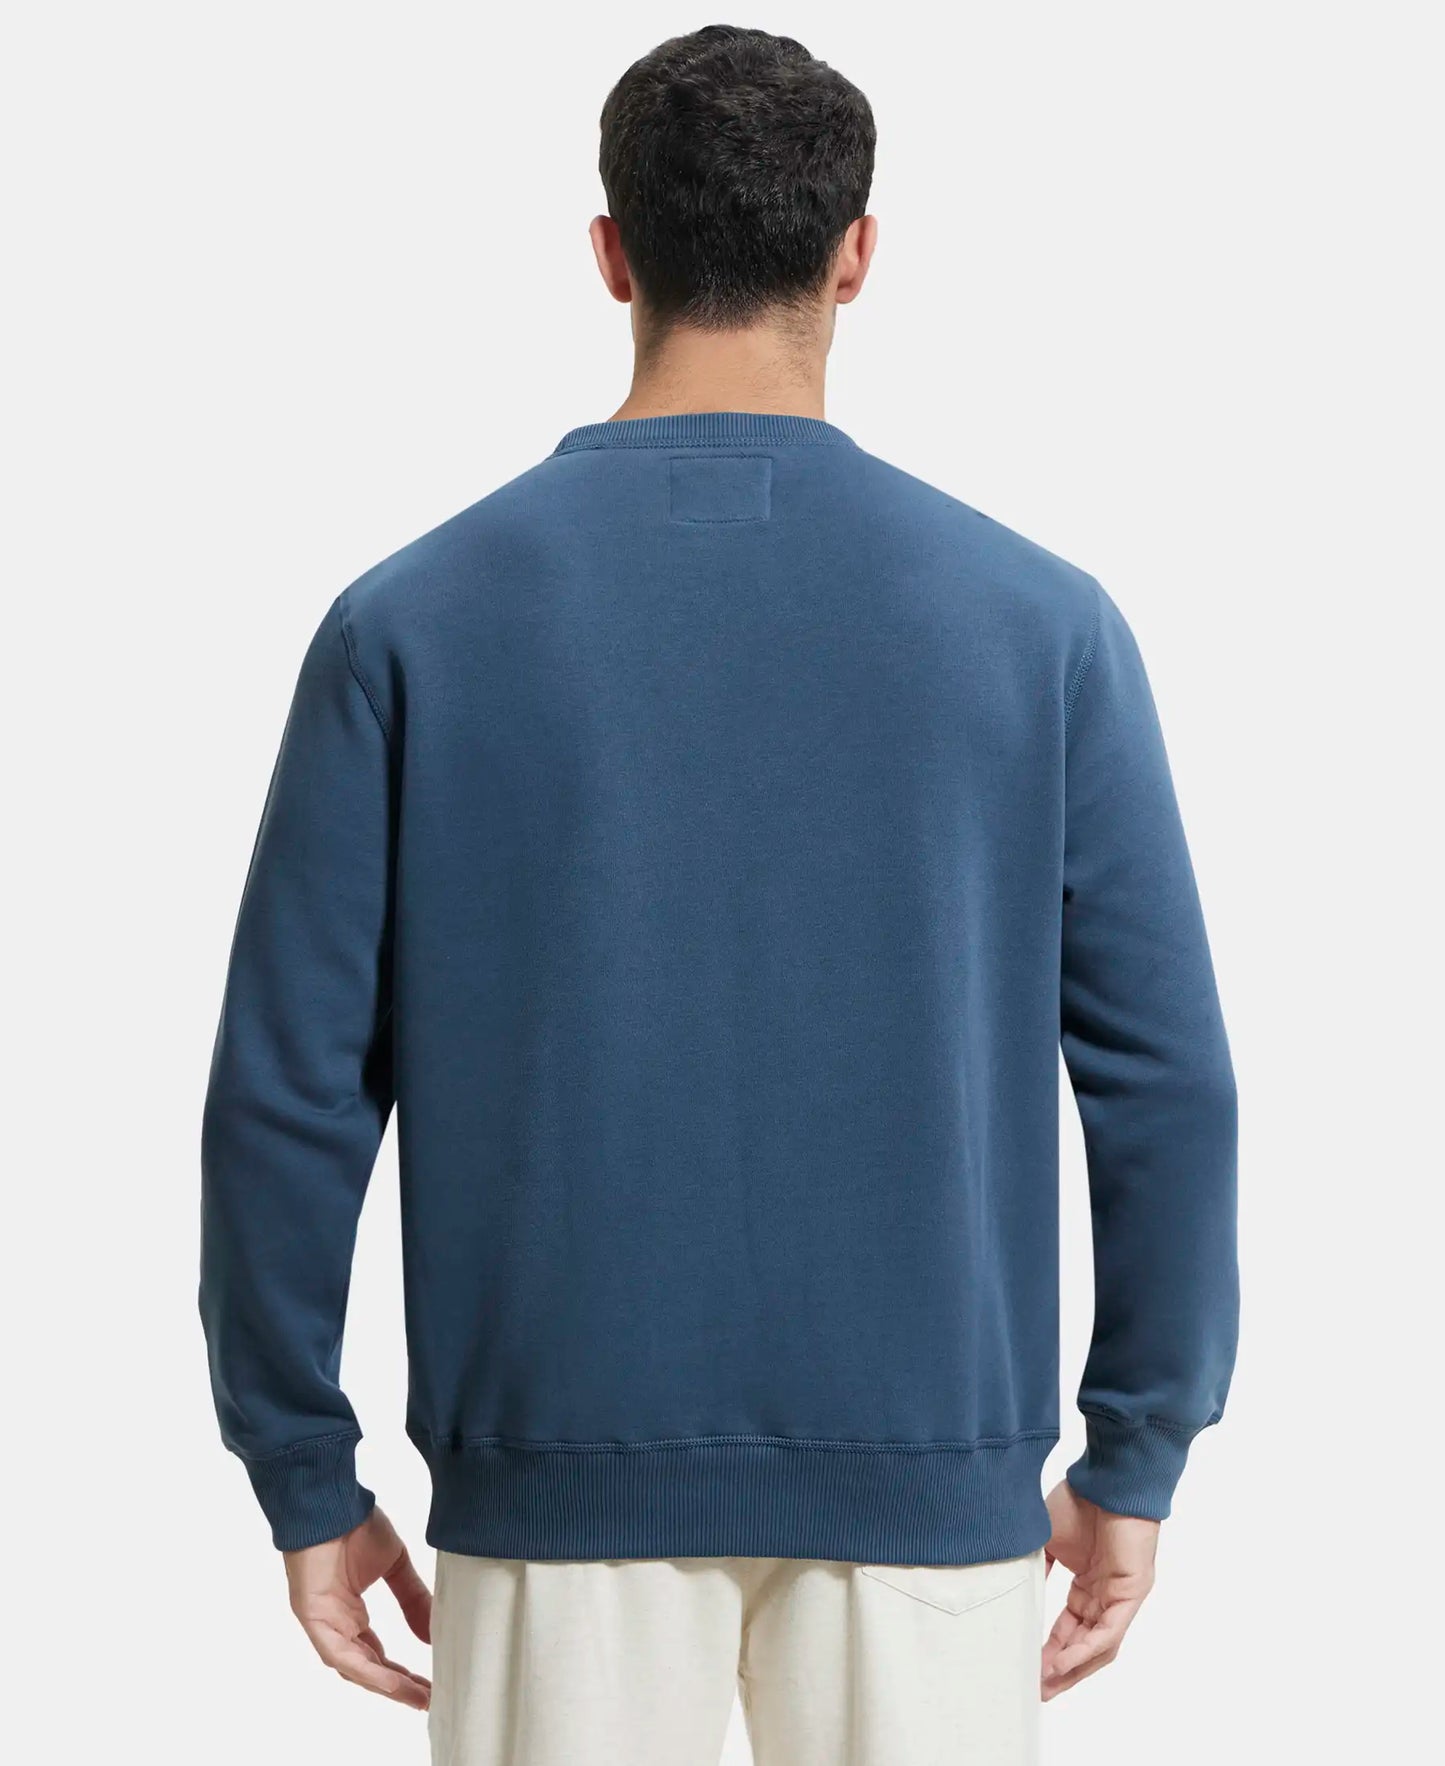 Super Combed Cotton Rich Fleece Sweatshirt with StayWarm Technology - Mid Night Navy-3